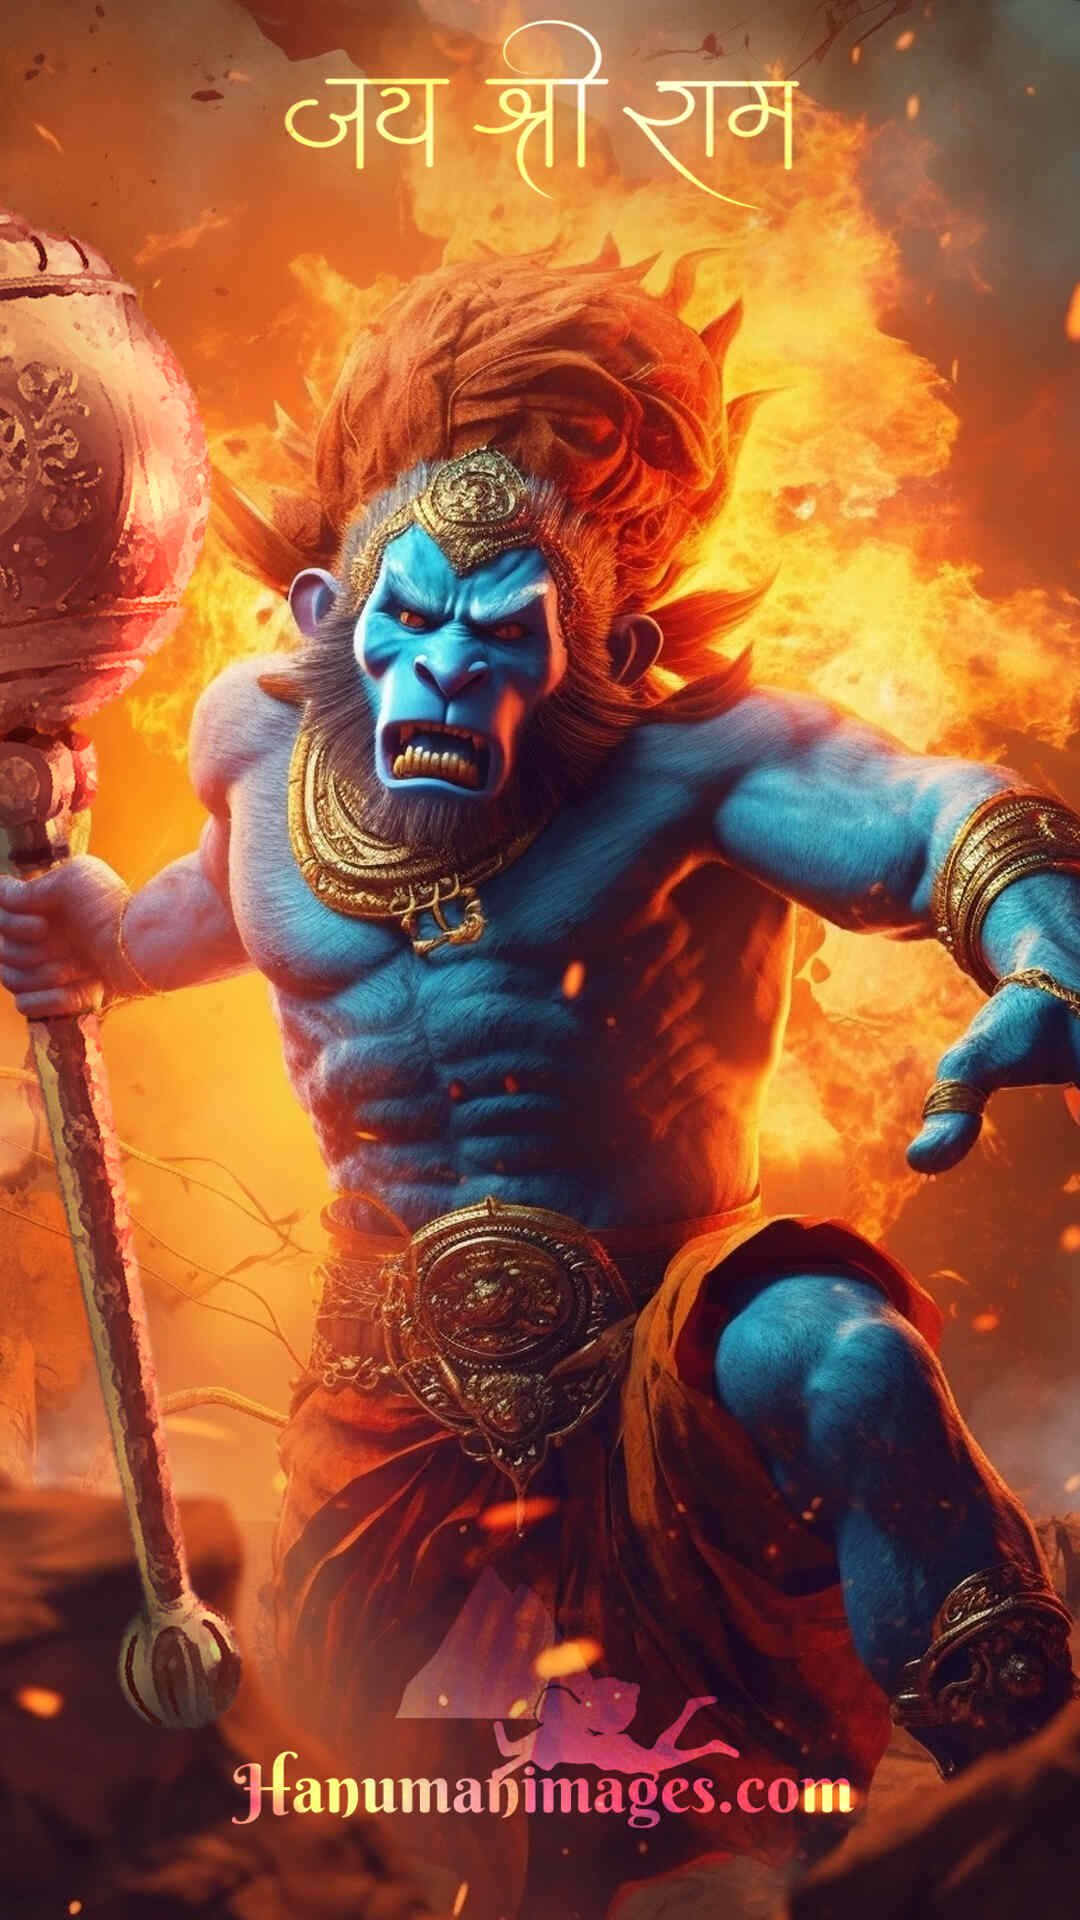 angriest lord hanuman pic HD